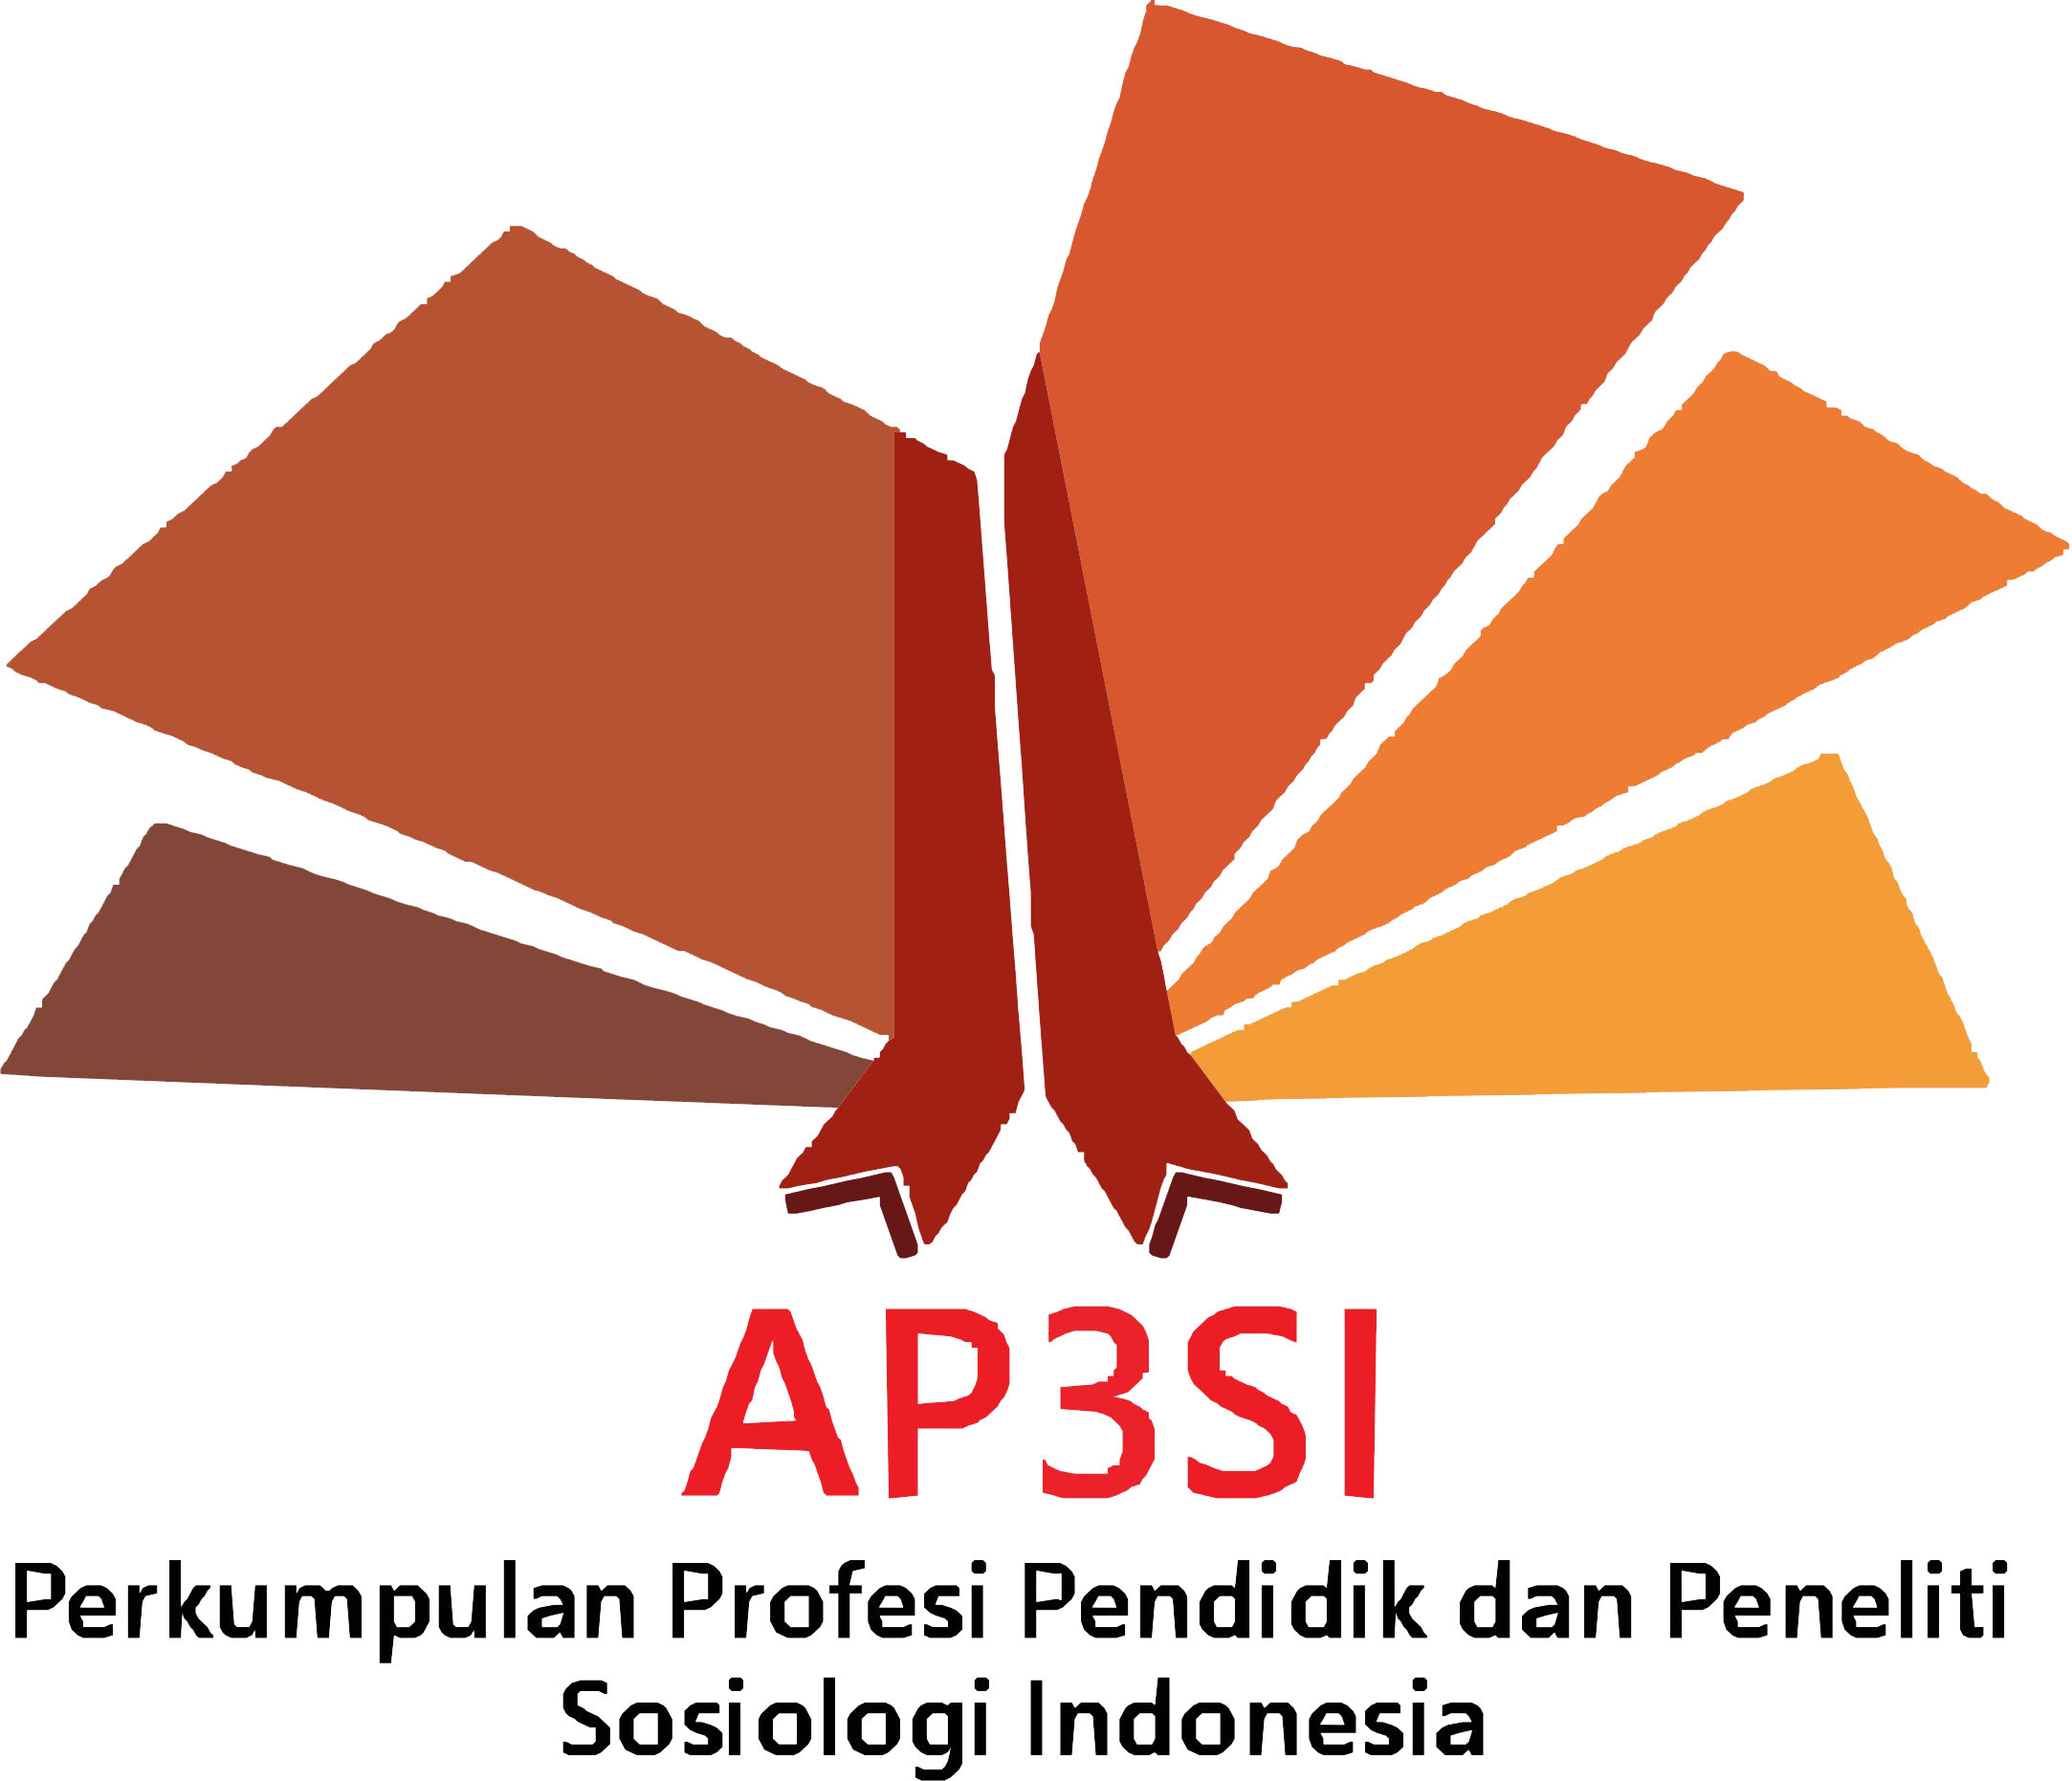 AP3SI – Asosiasi Profesi Pendidik dan Peneliti Sosiologi Indonesia